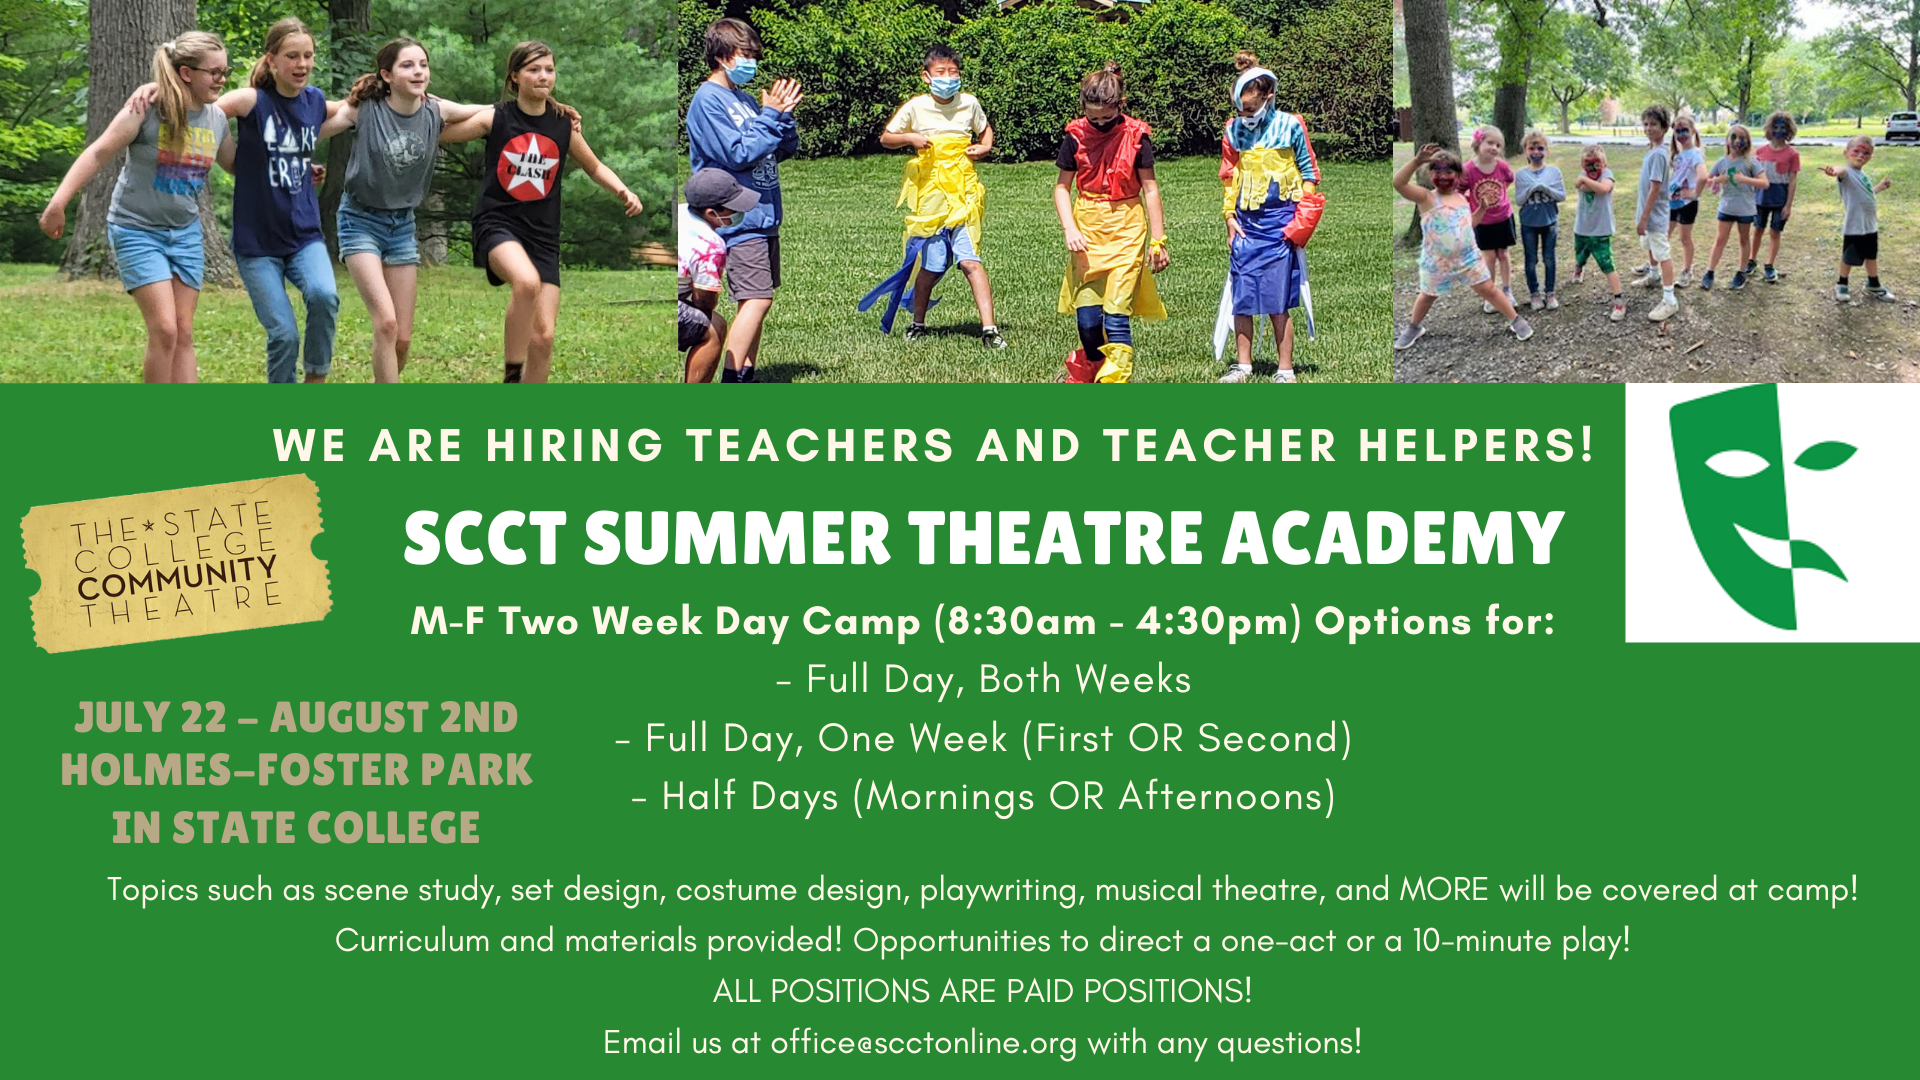 SCCT Theatre Academy Hiring - FB Post (2)